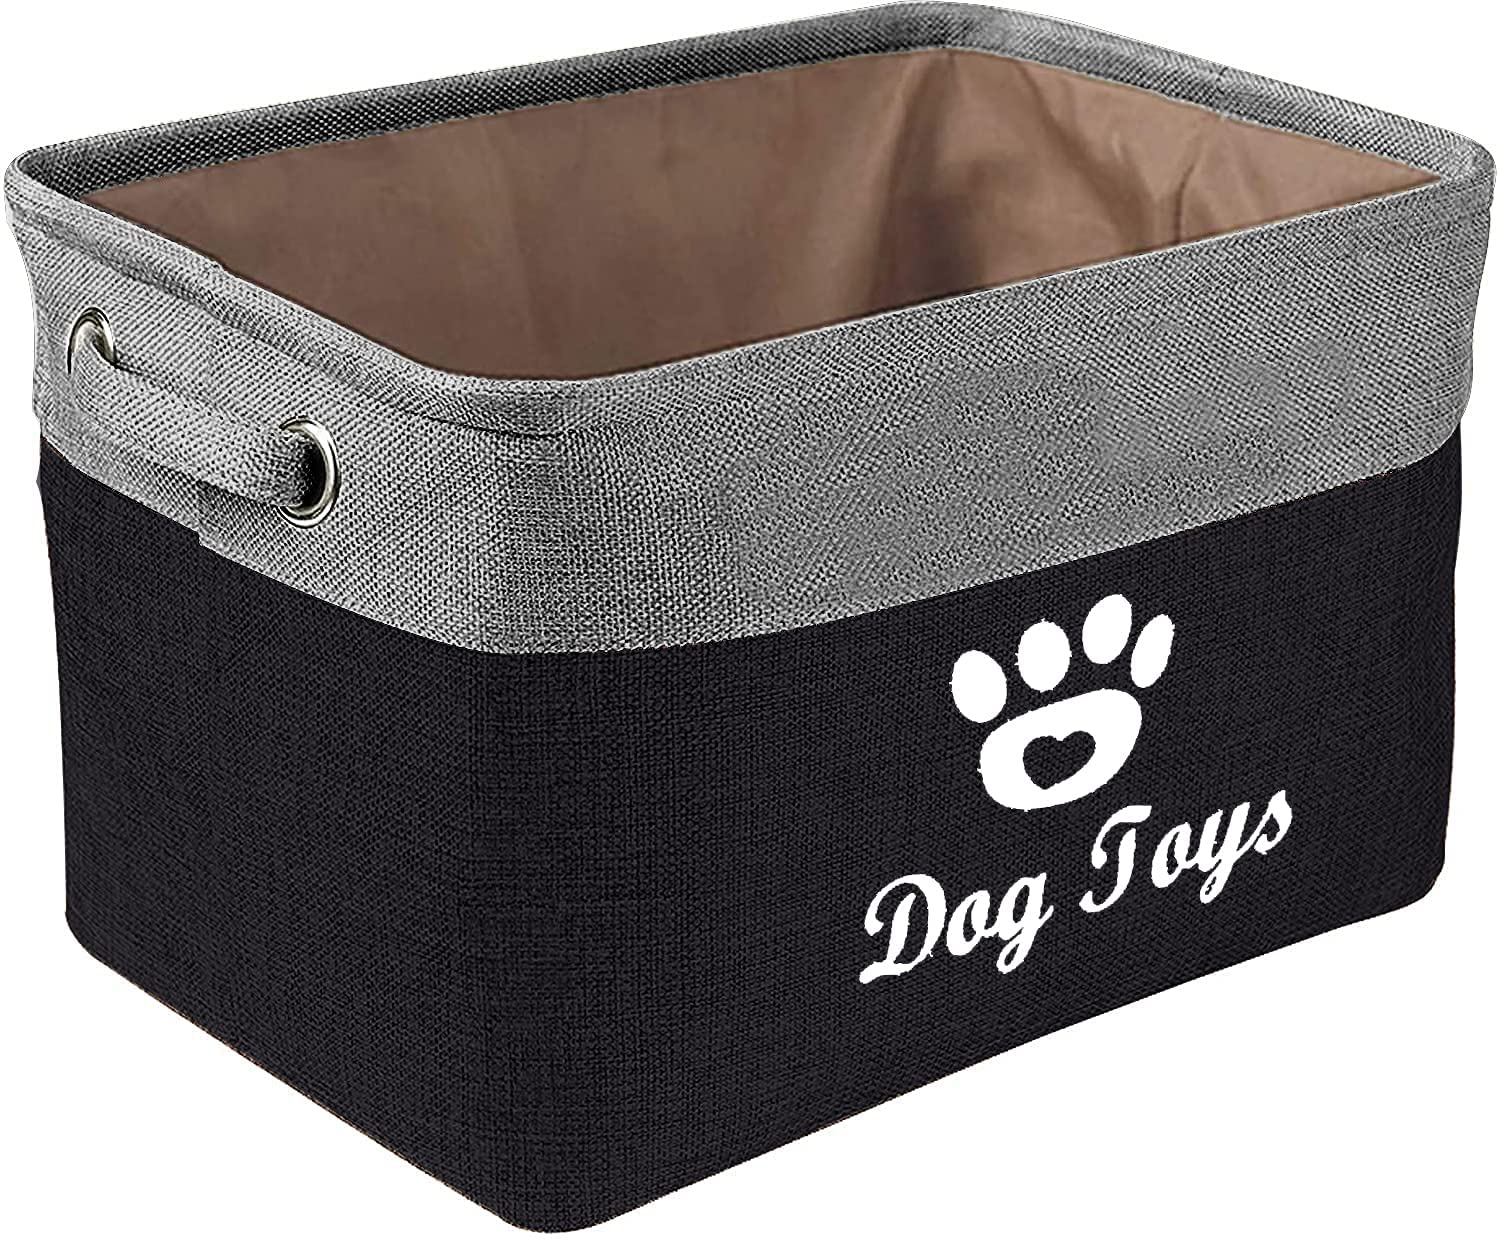 Dog Toys Basket, Dog Toys Storage Bag, Dog Toys Bin, Dog Toys